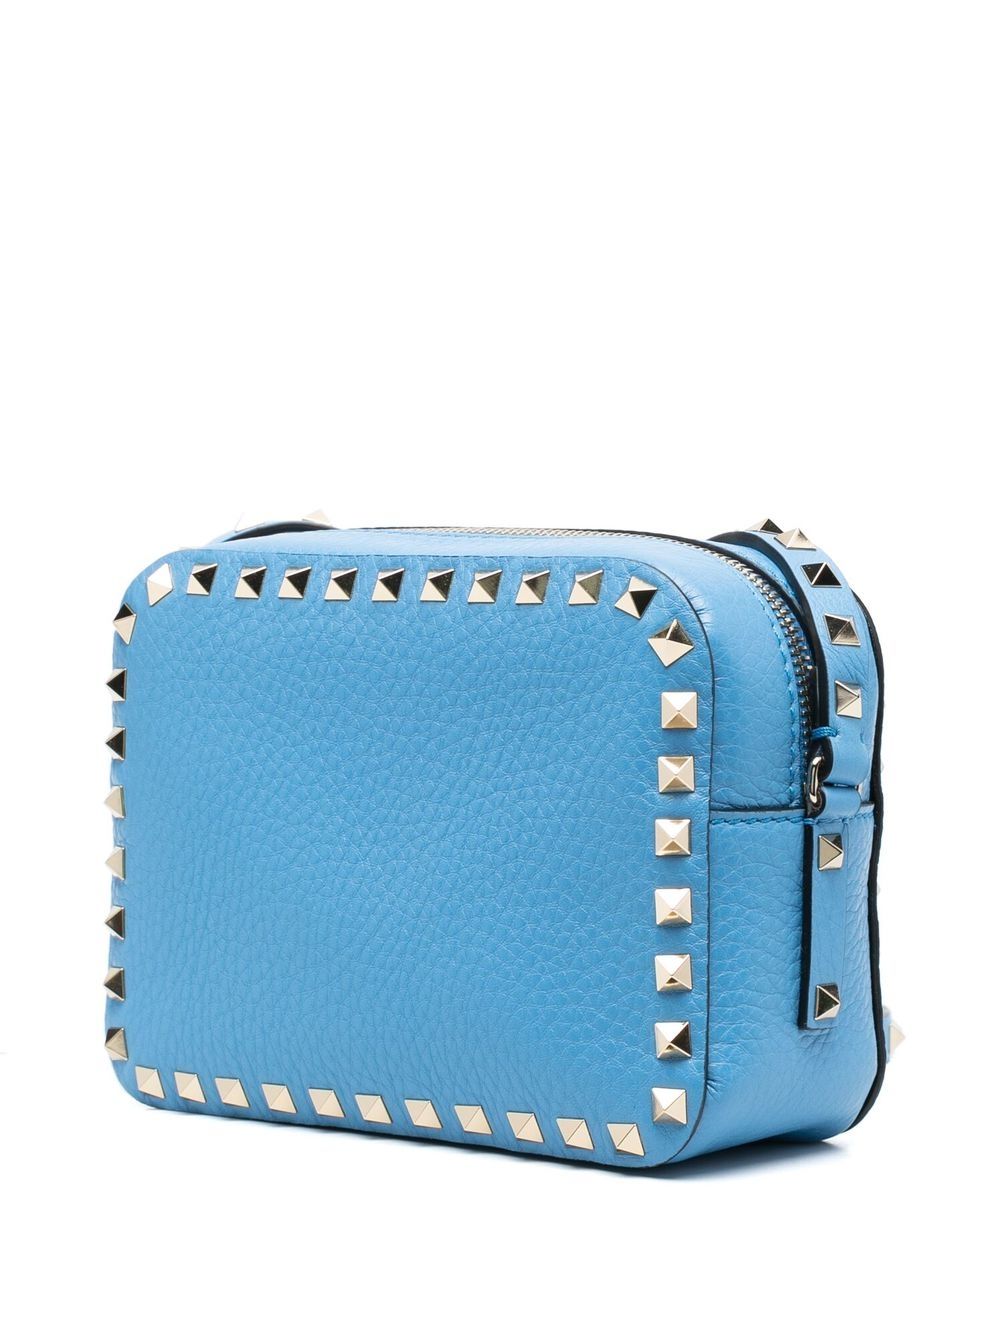 Valentino Blue Leather Rockstud Crossbody Bag